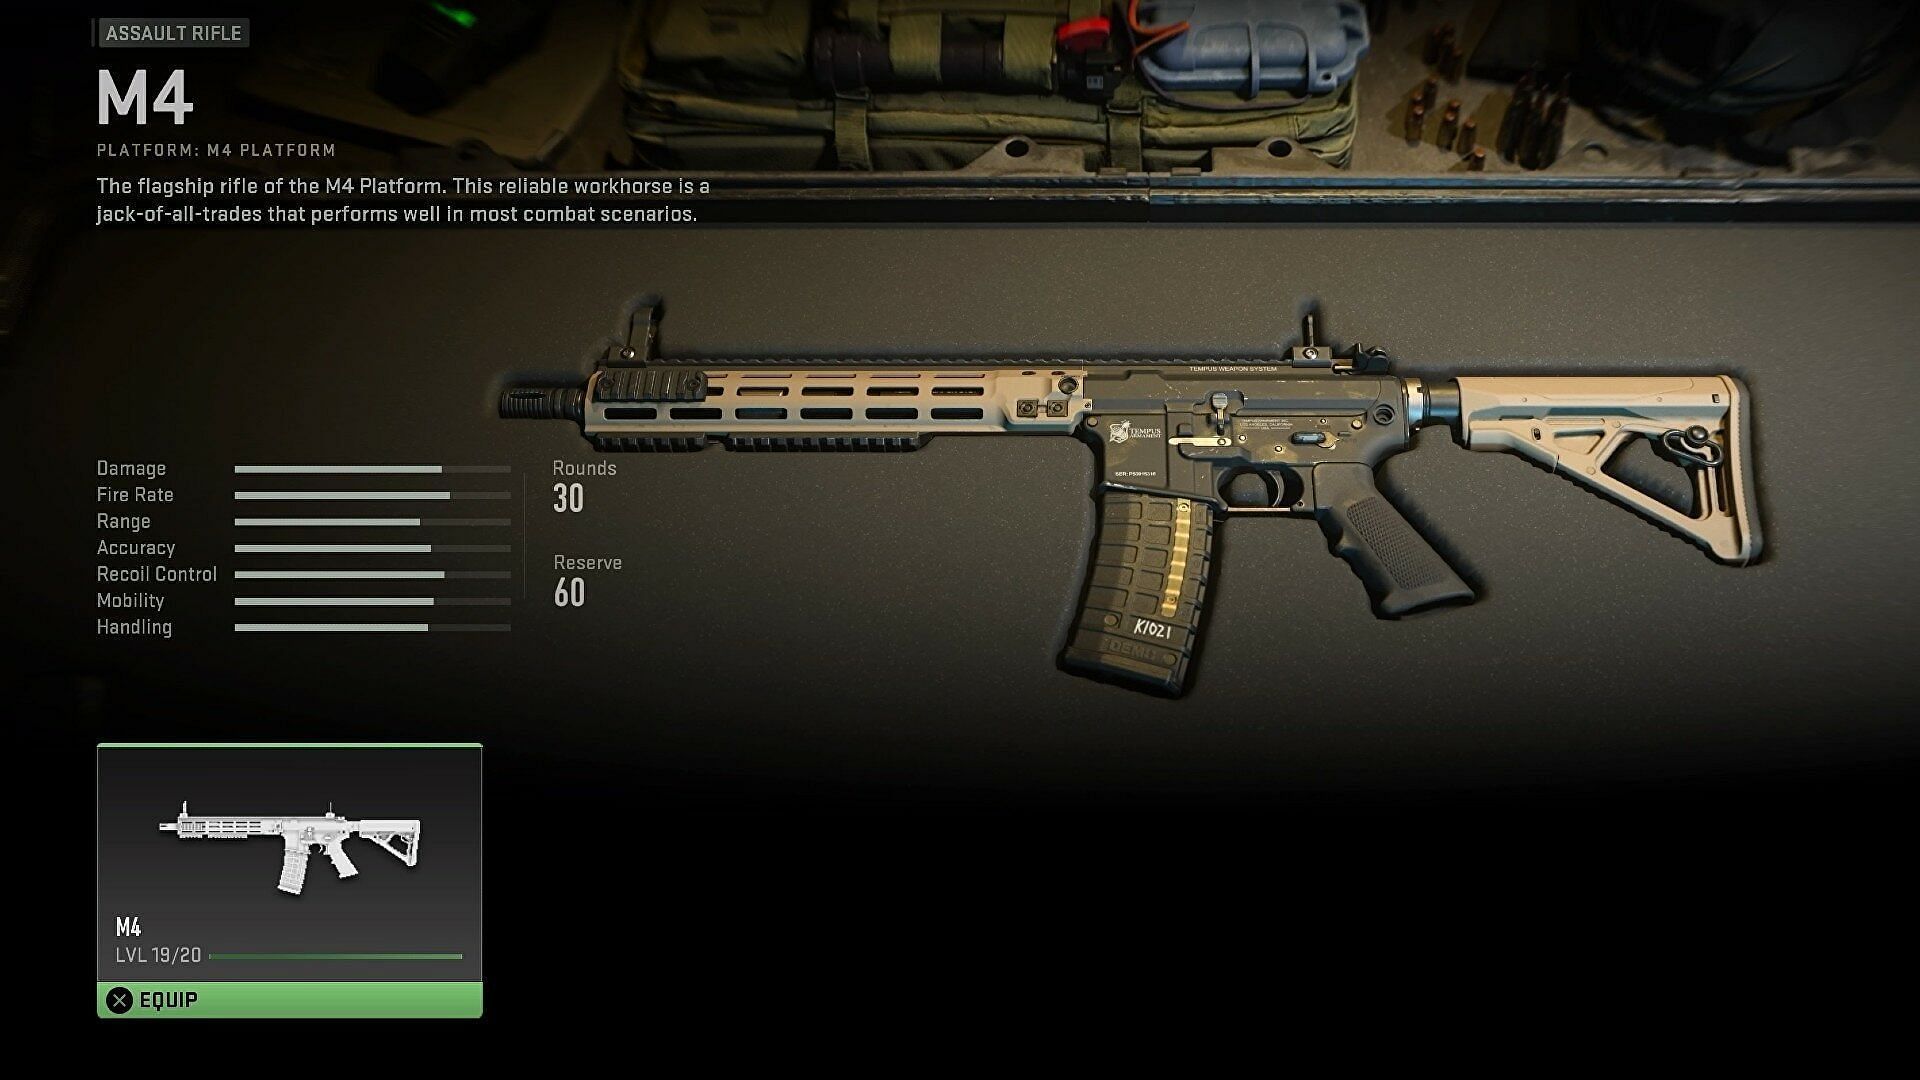 M4 in Modern Warfare 2 (Image via callofduty.com)